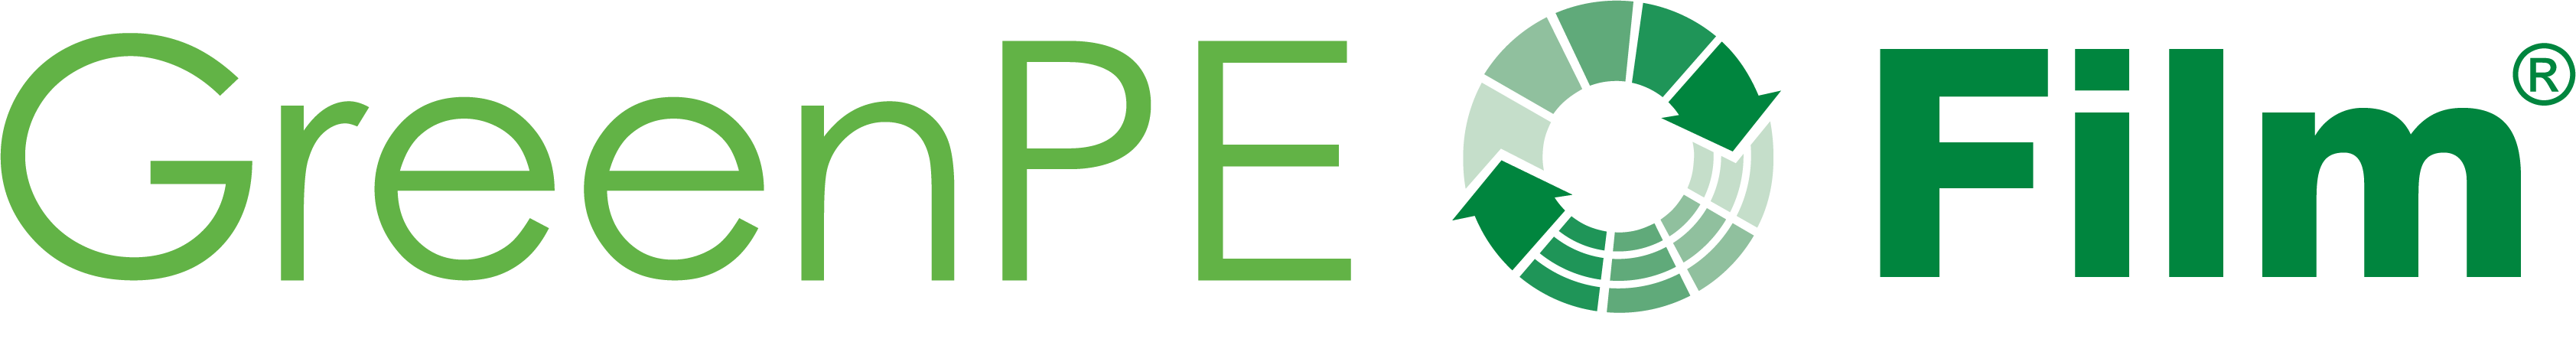 GreenPE Film logo